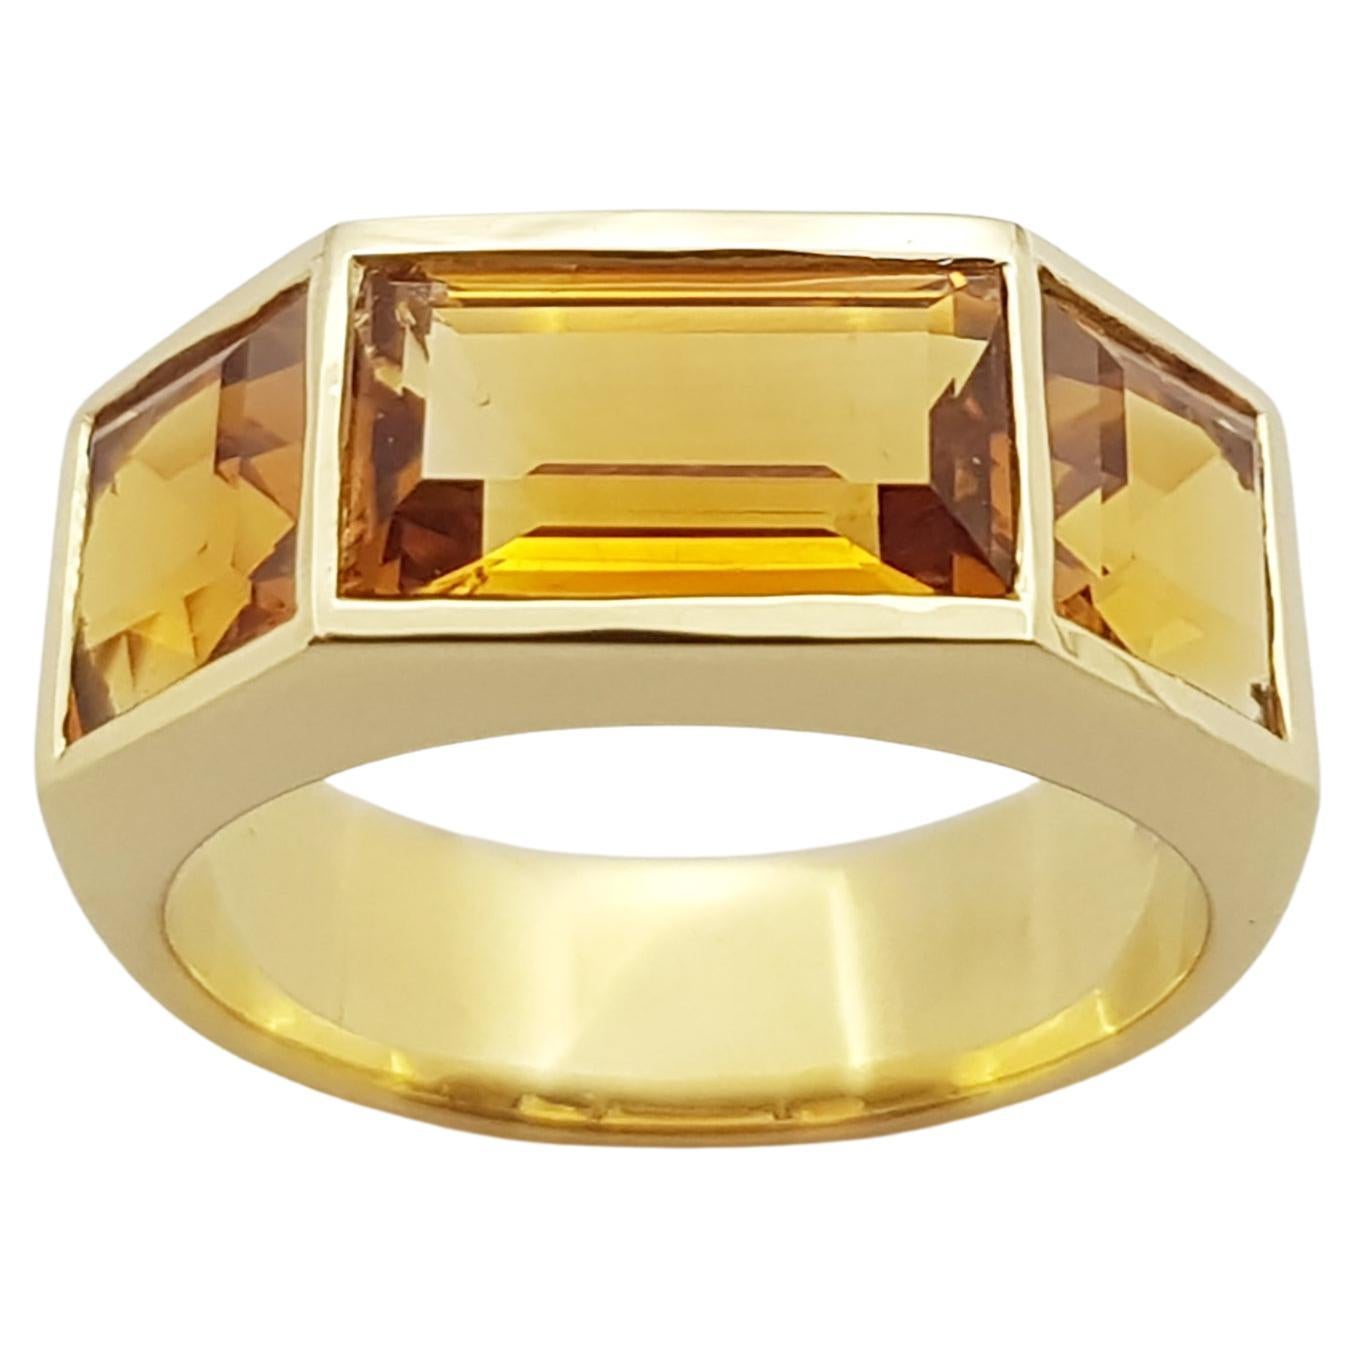 Citrine Ring Set in 18 Karat Gold Settings